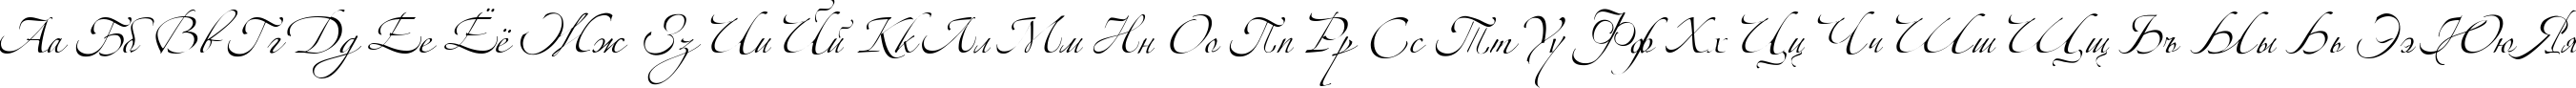 Пример написания русского алфавита шрифтом Zeferino Three